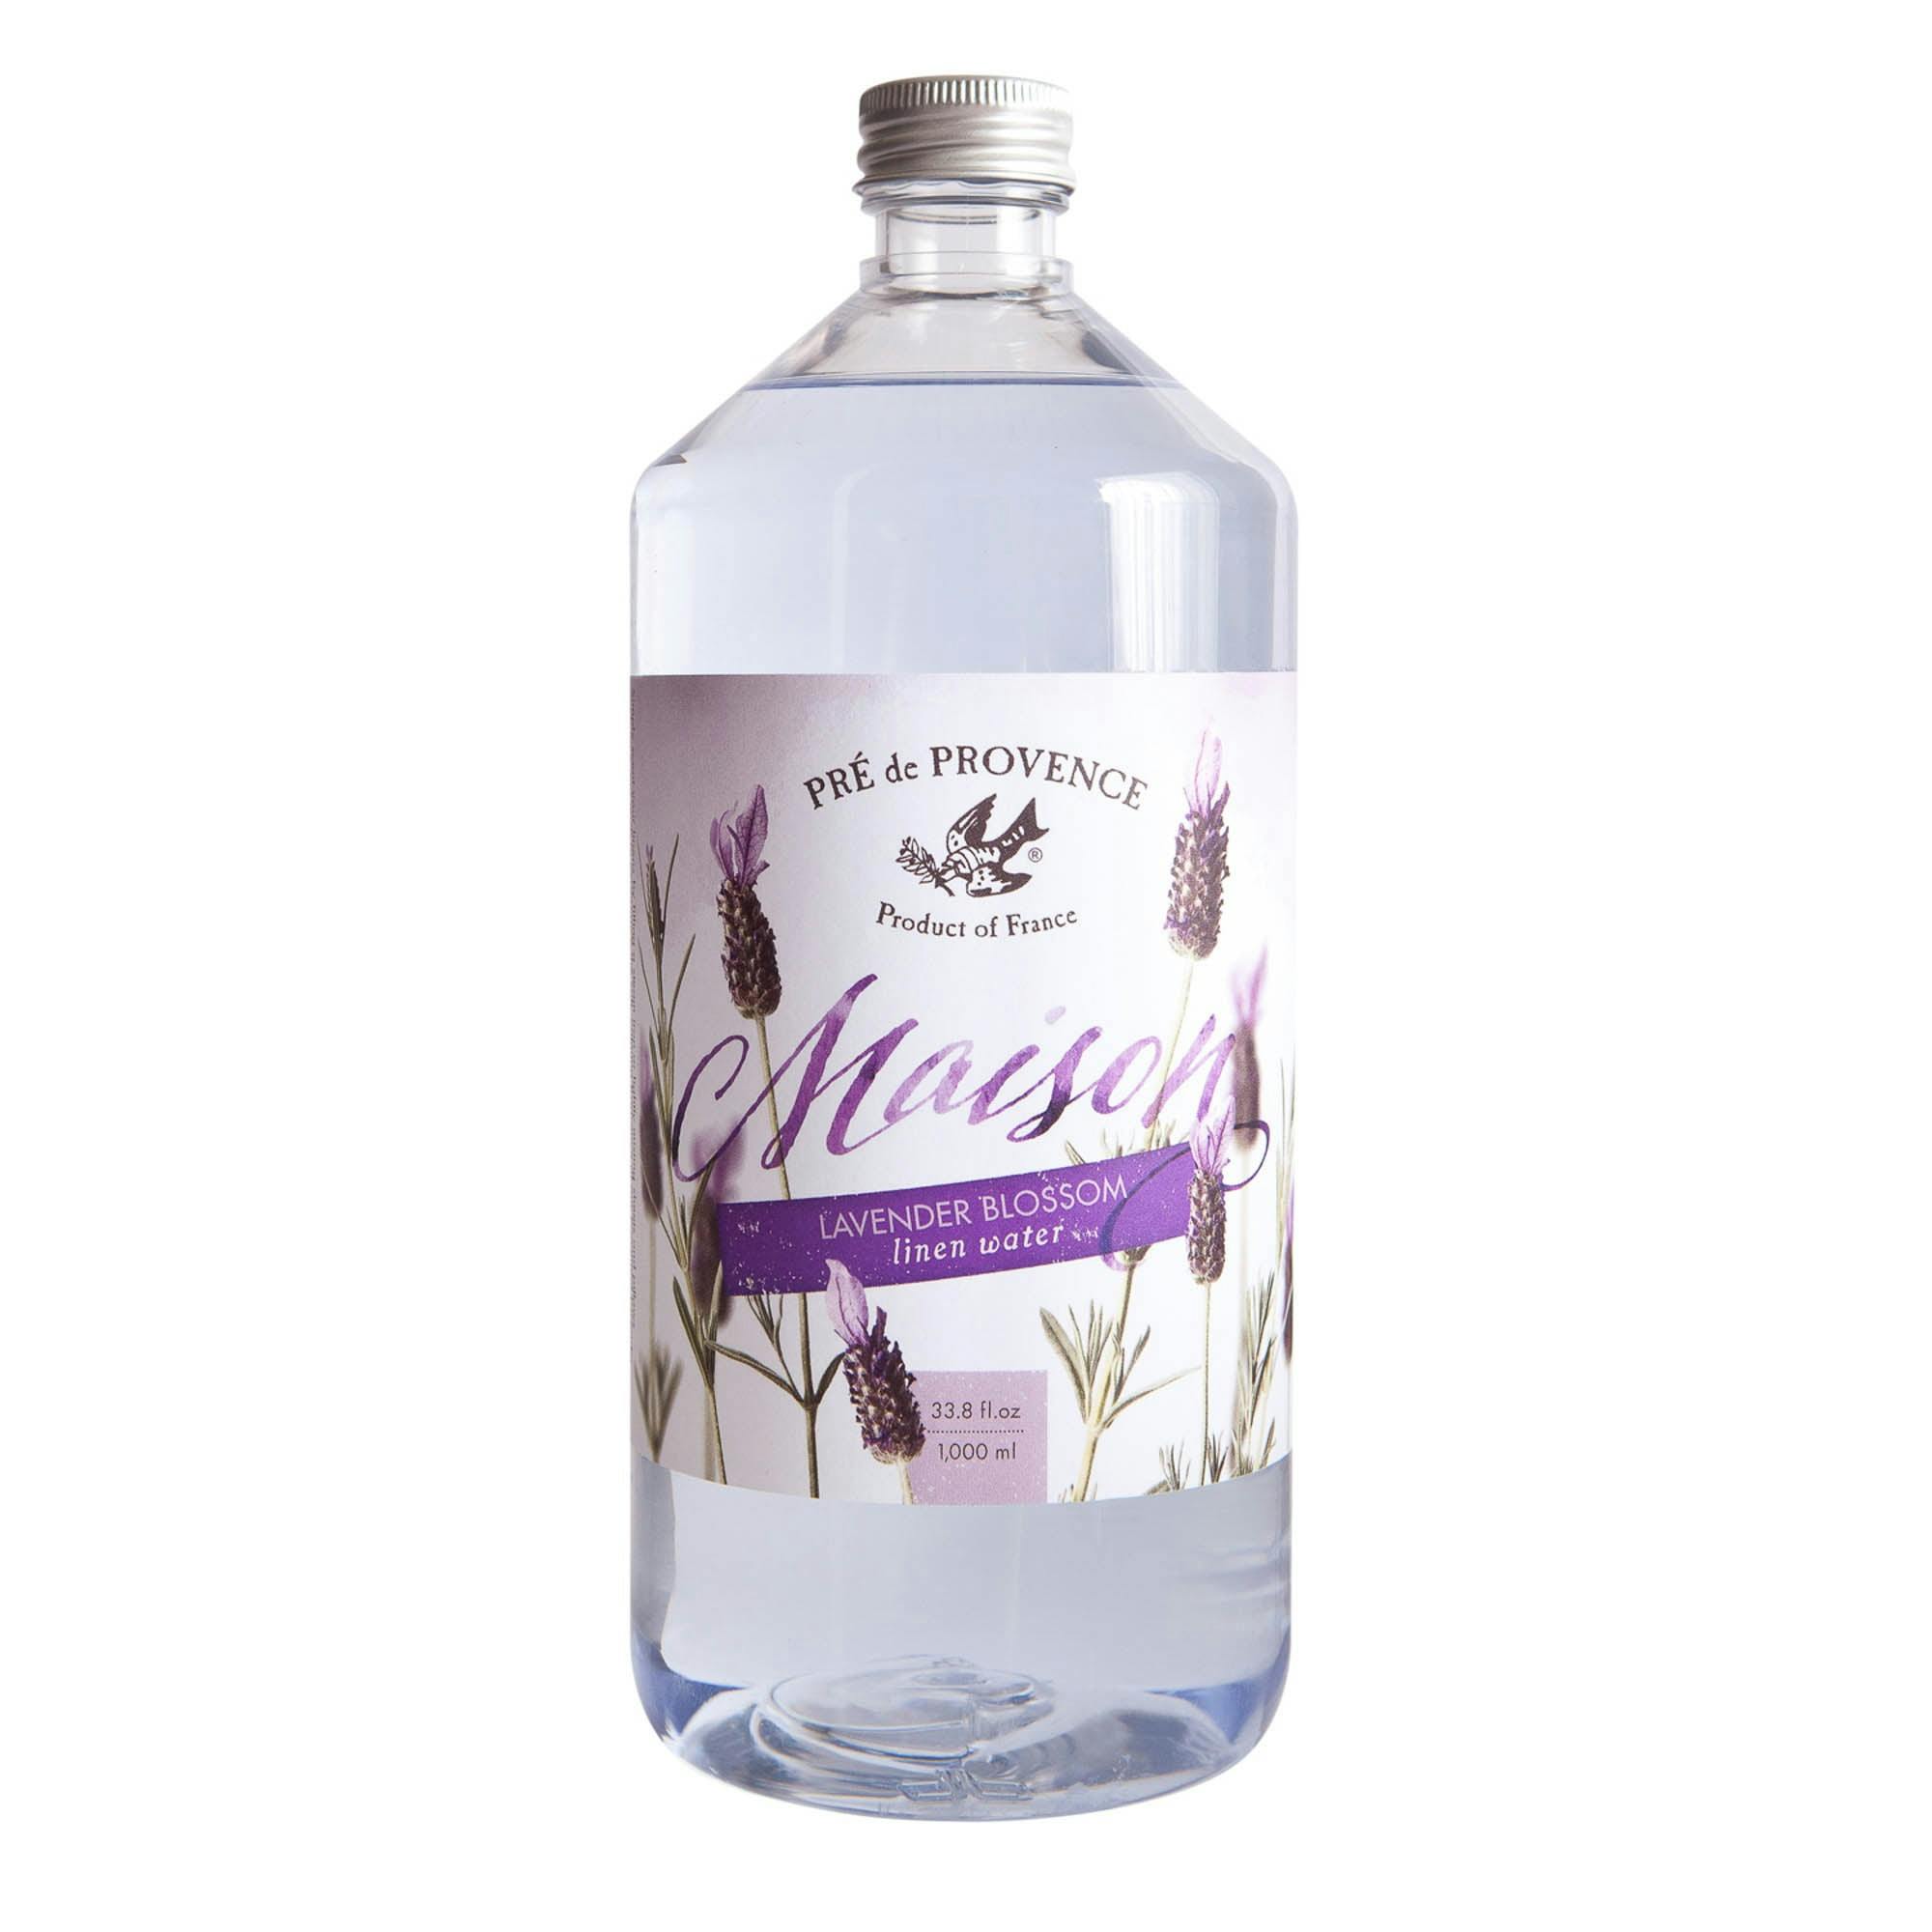 Lavender Blossom Gentle Linen Water 33.8oz